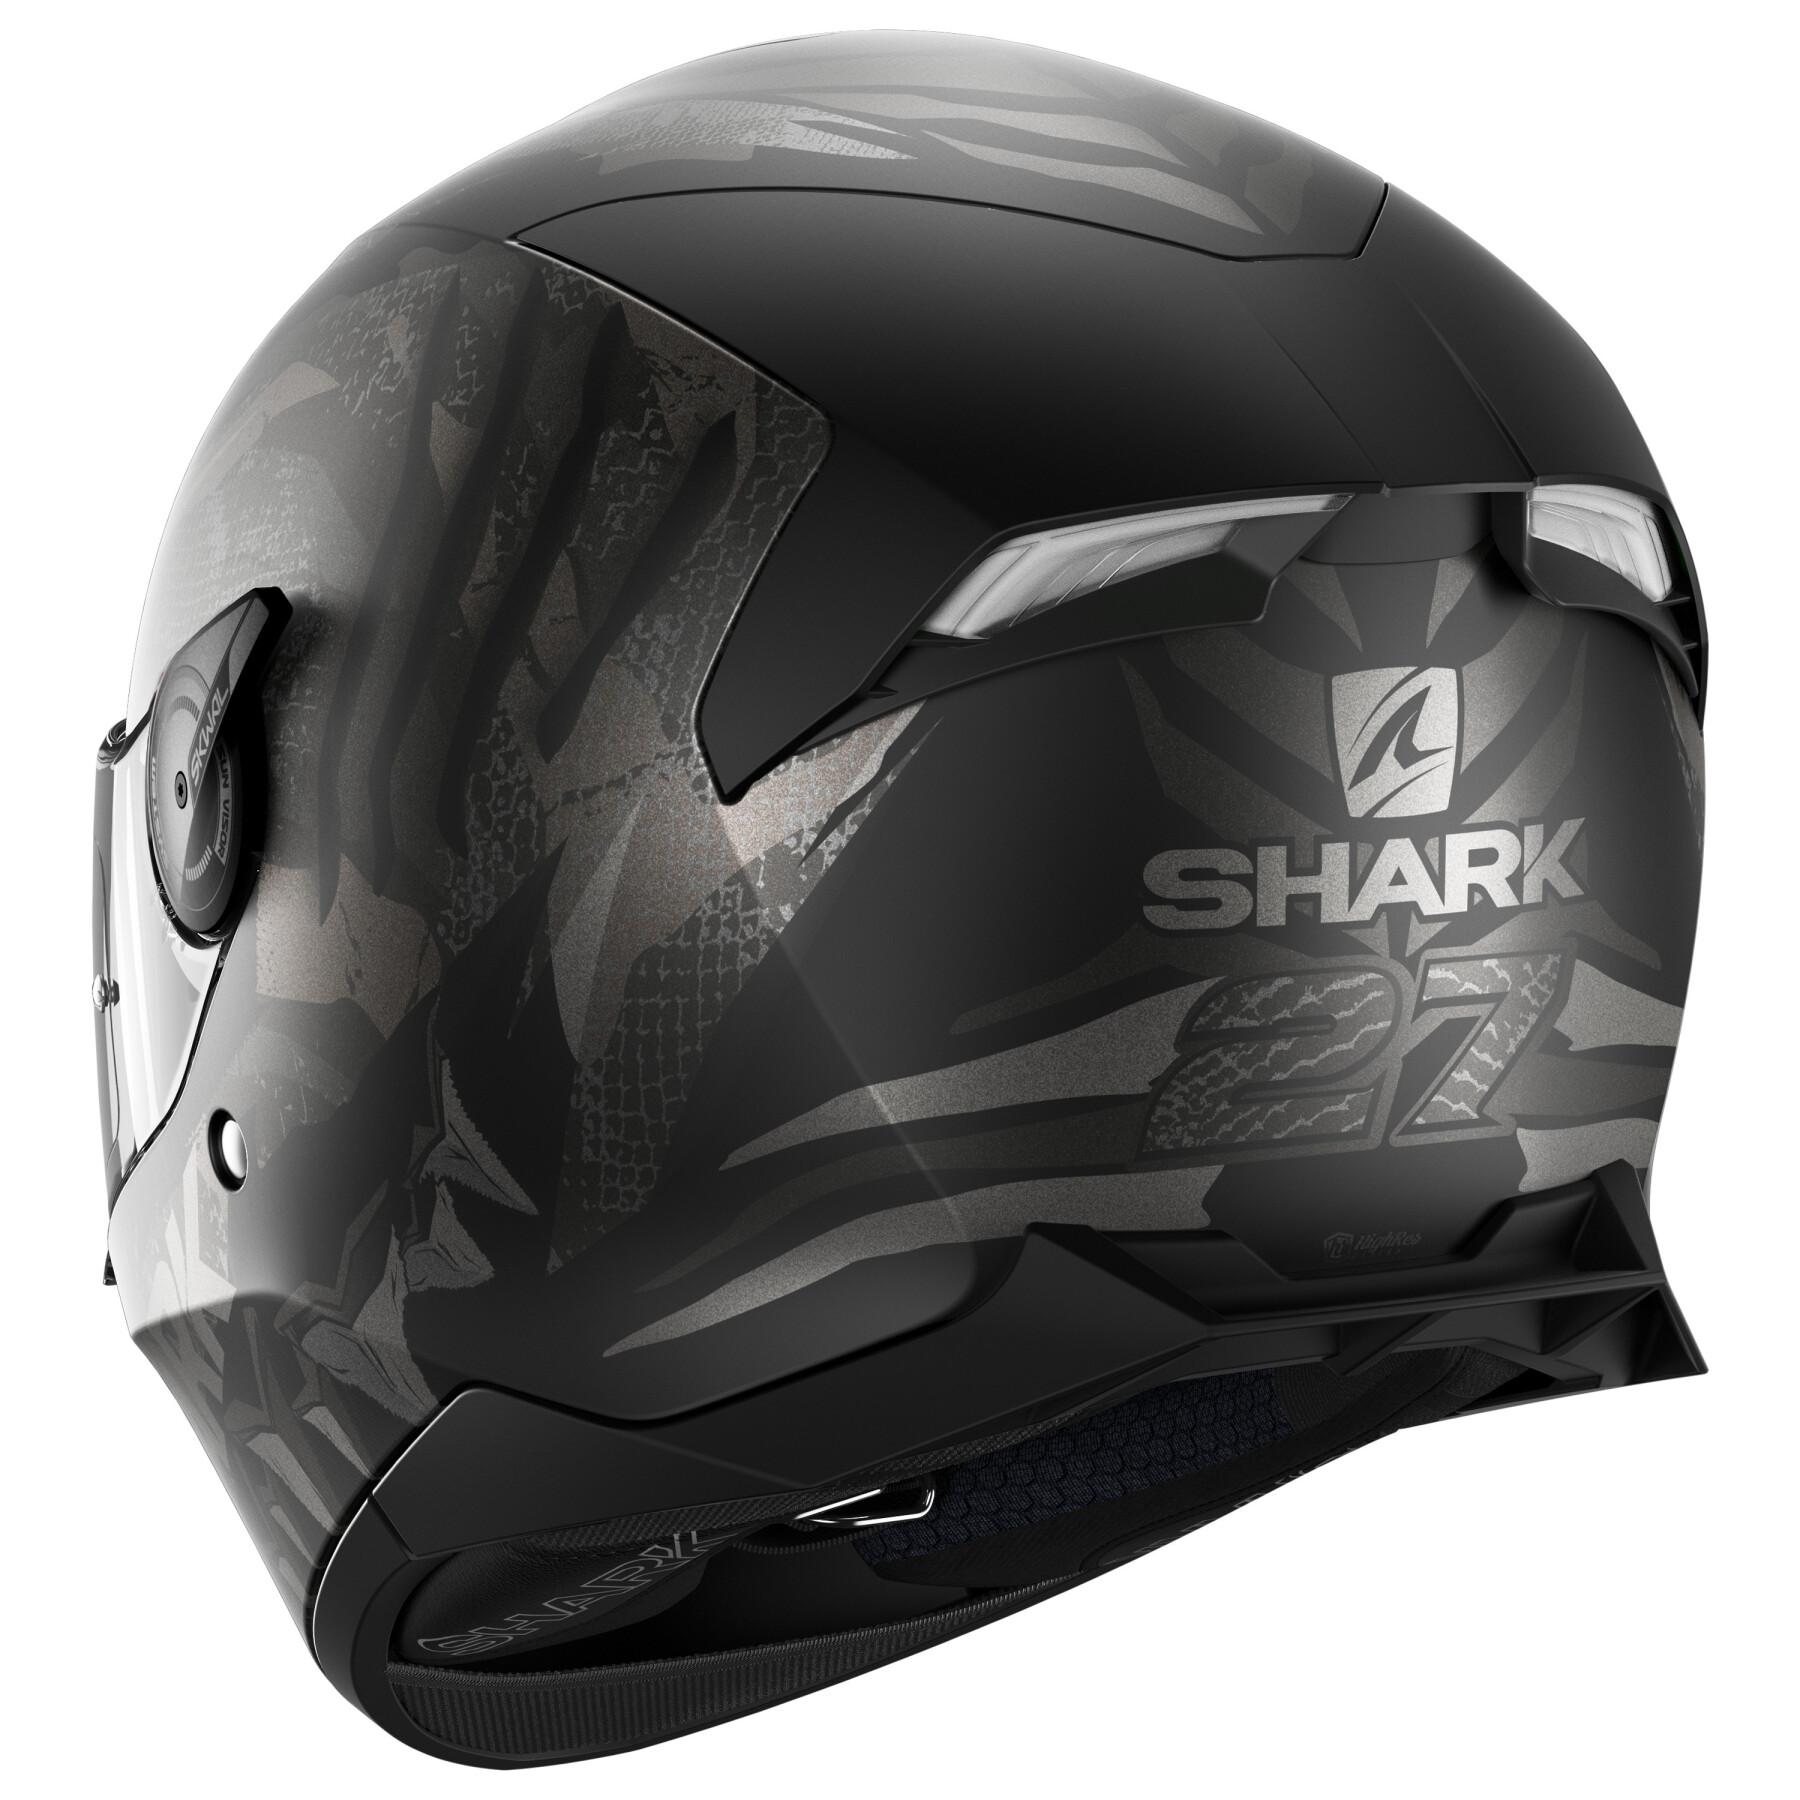 Full face motorcycle helmet Shark skwal 2 iker lecuona